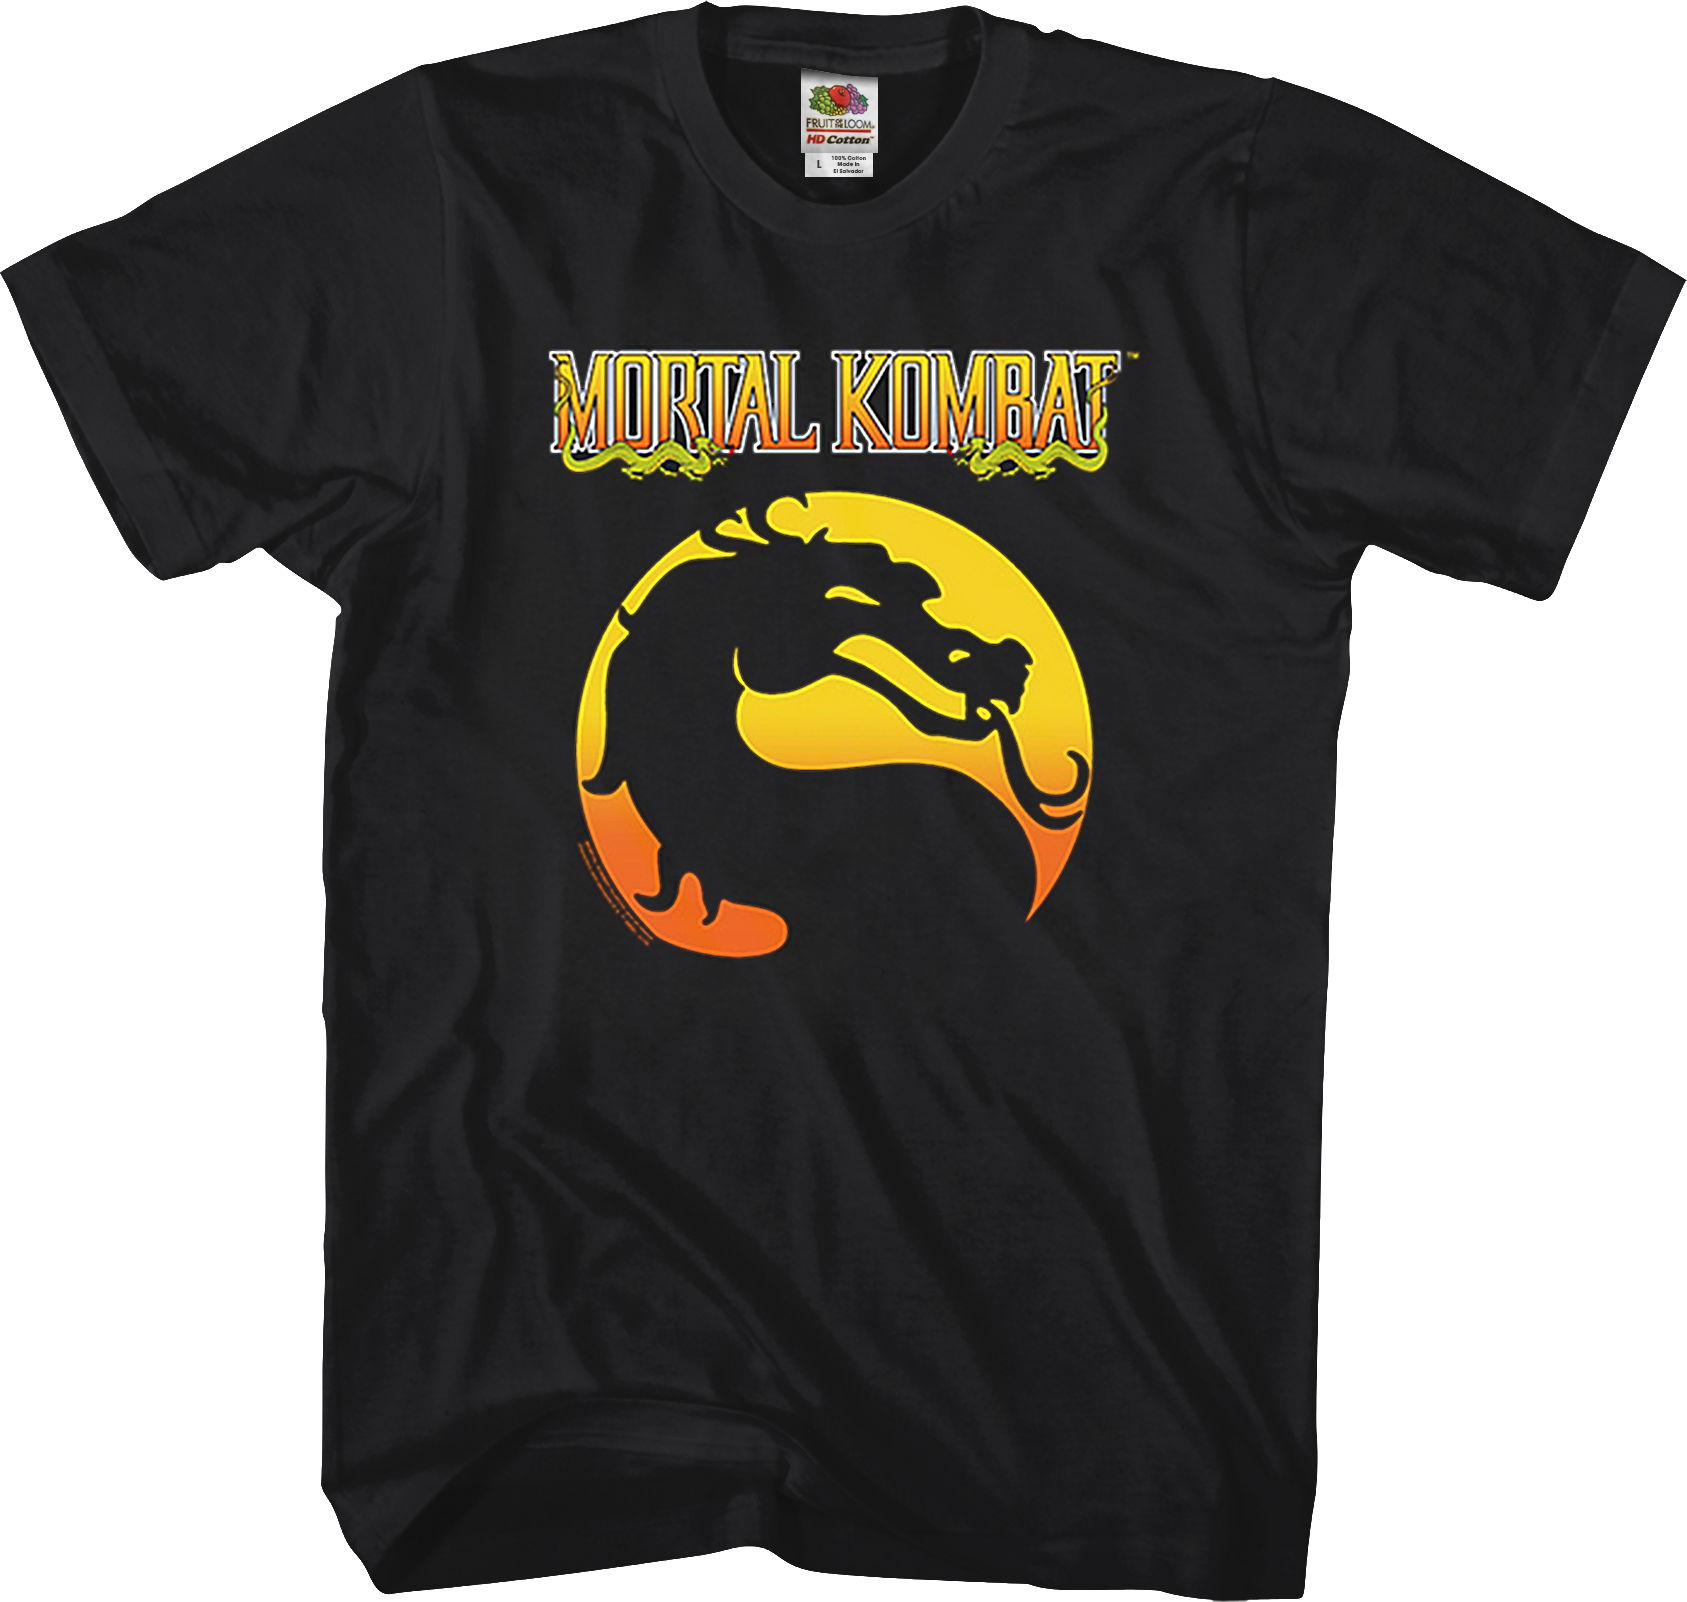 RETRO GAMER JUNCTION - Mortal Kombat II